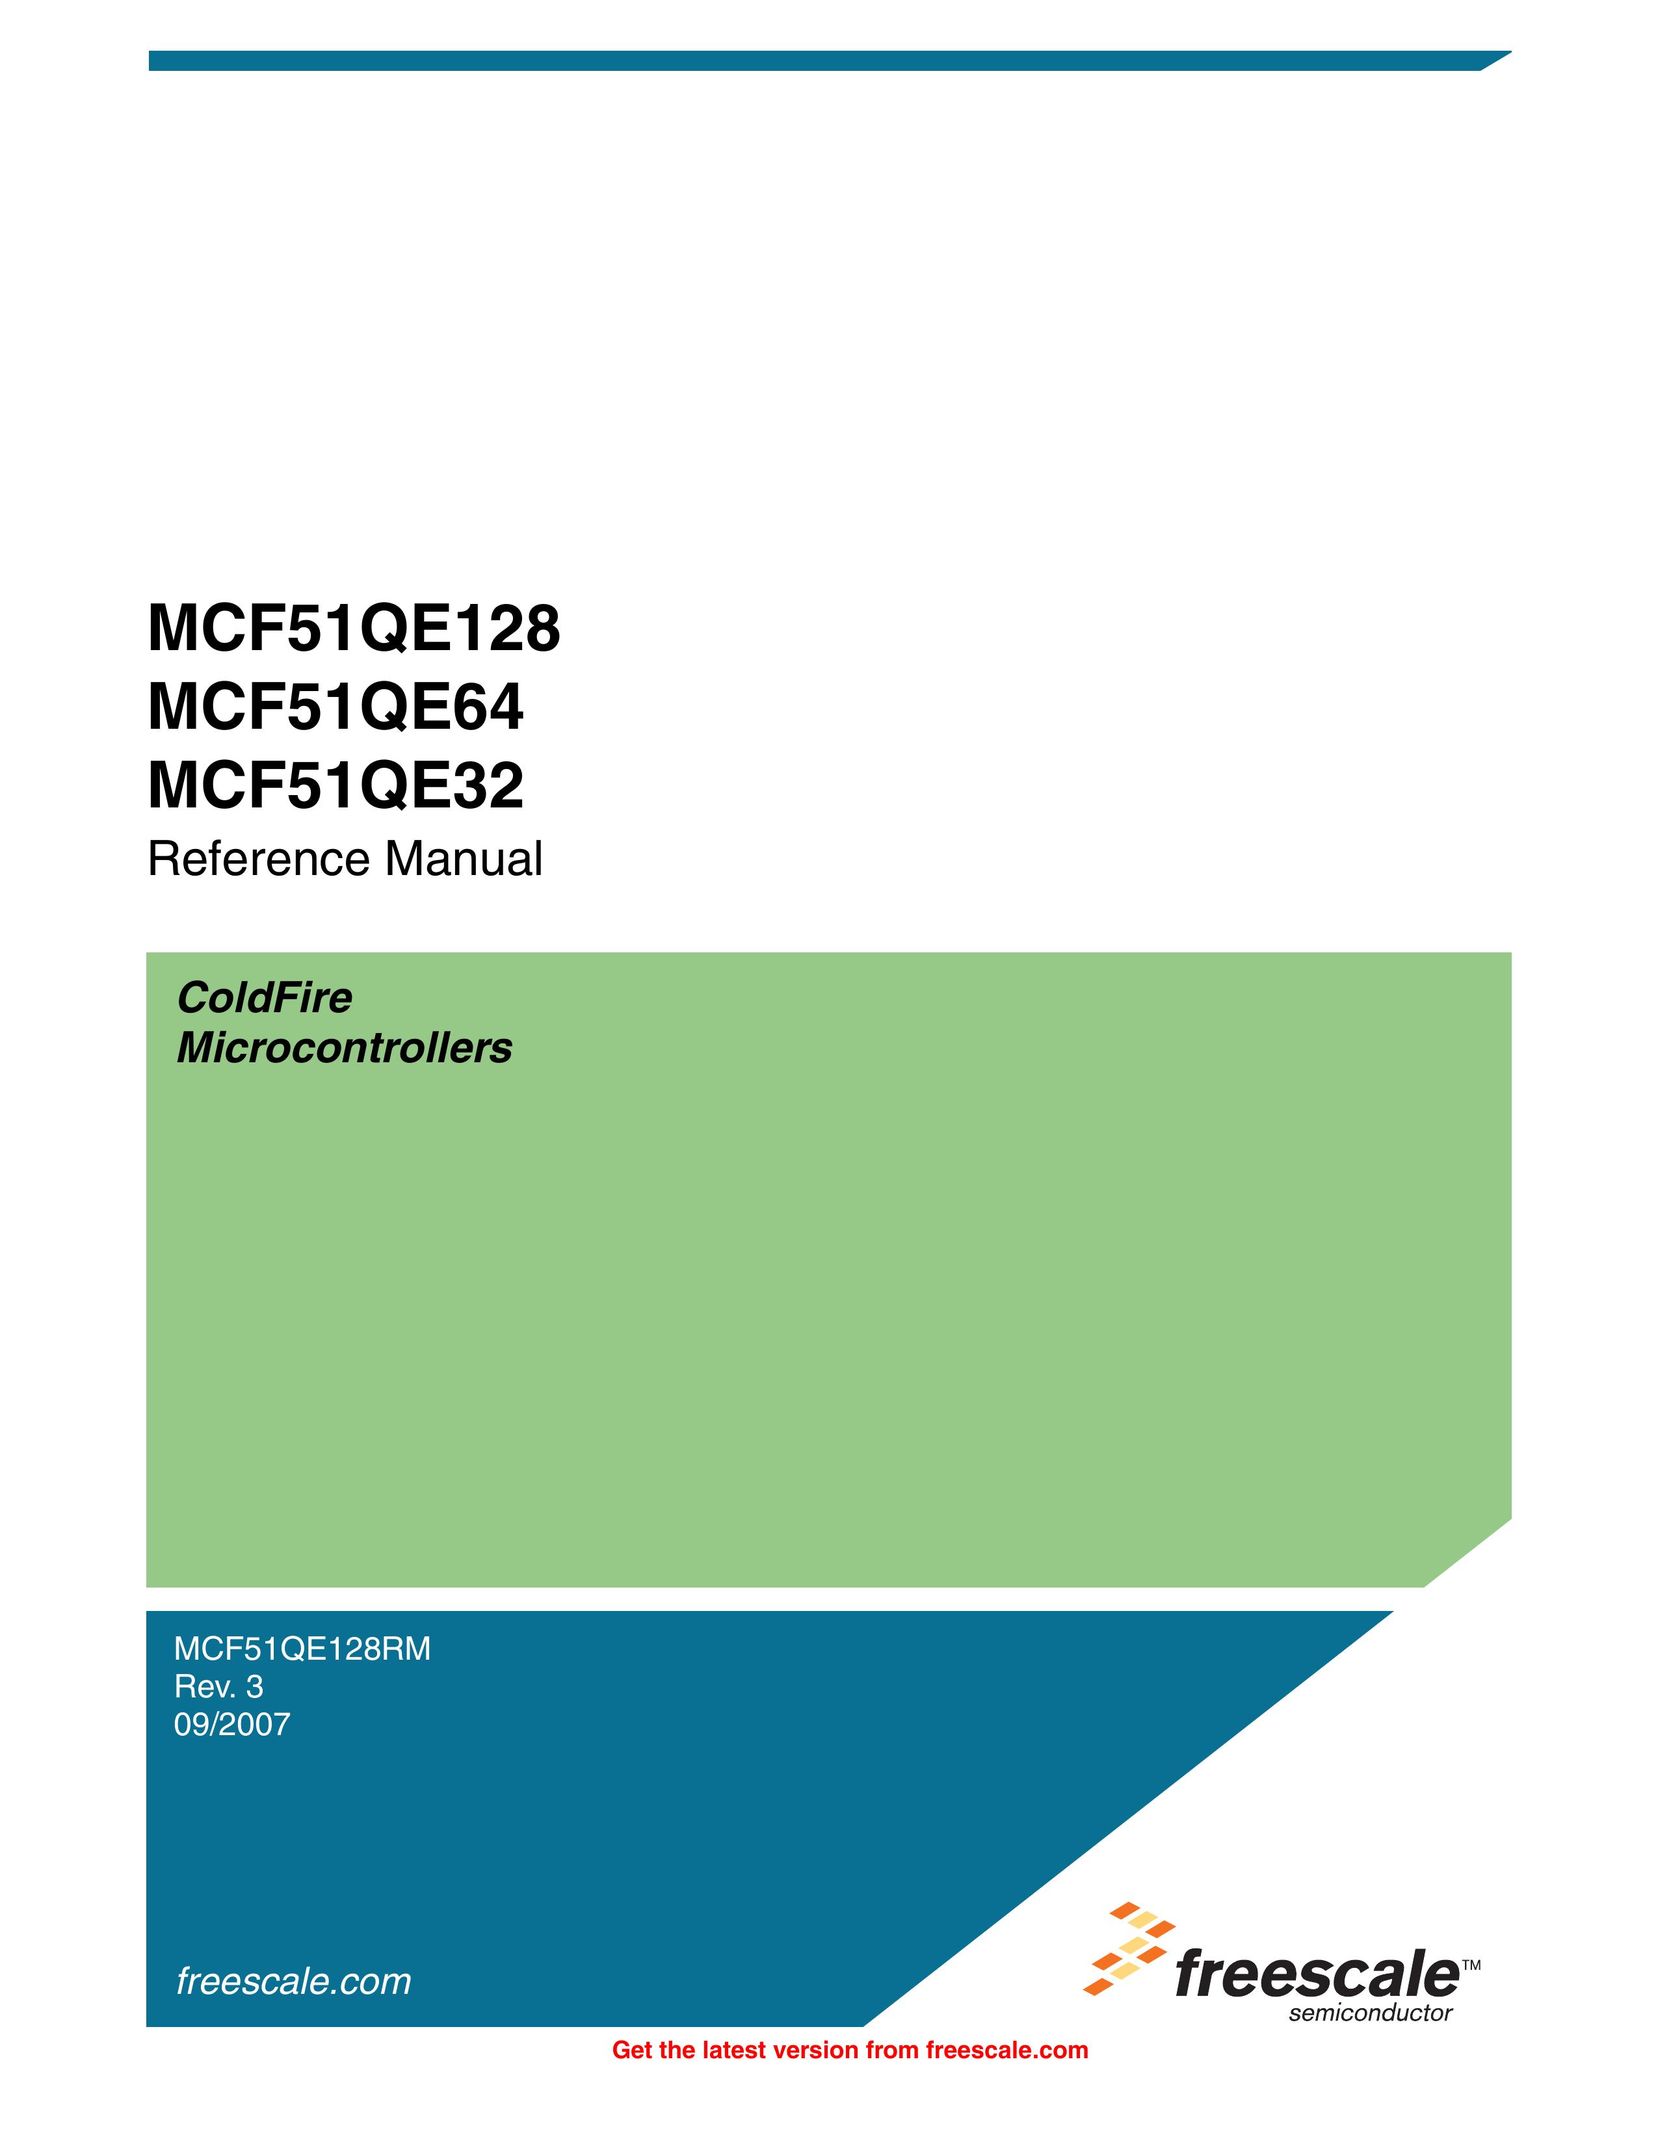 Freescale Semiconductor MCF51QE128RM Answering Machine User Manual